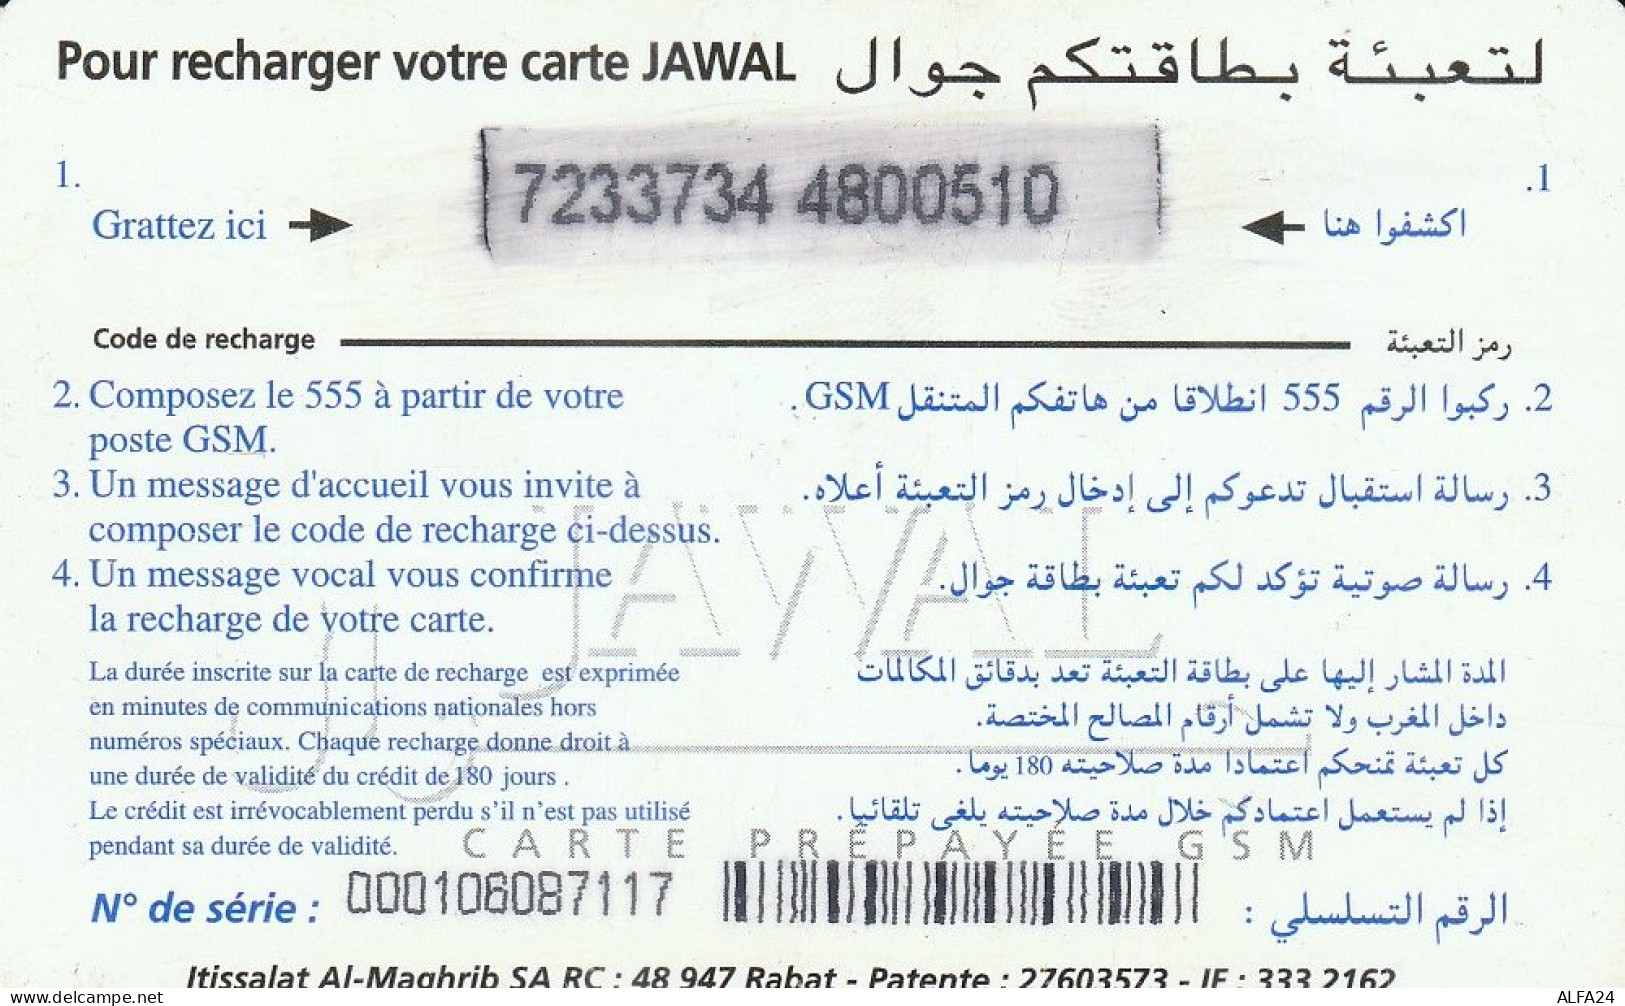 PREPAID PHONE CARD MAROCCO  (CZ2450 - Marokko